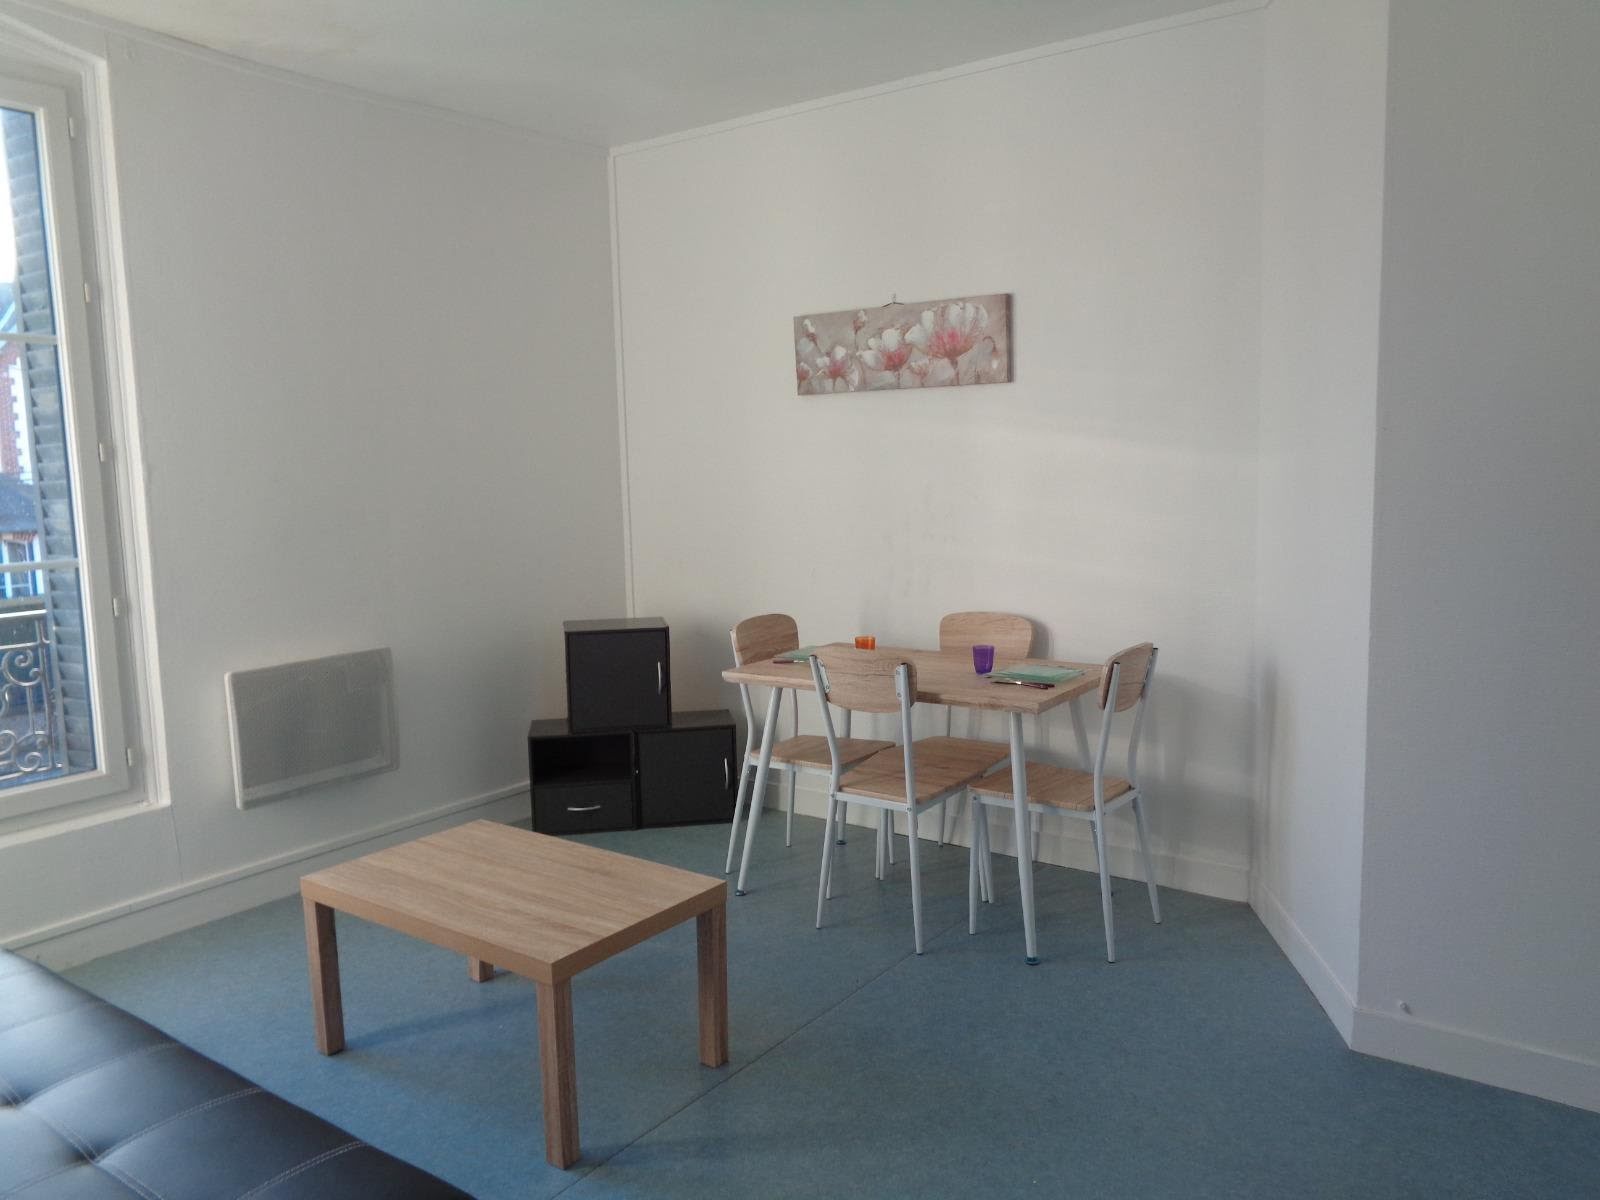 Location studio meublé 28,14 m2